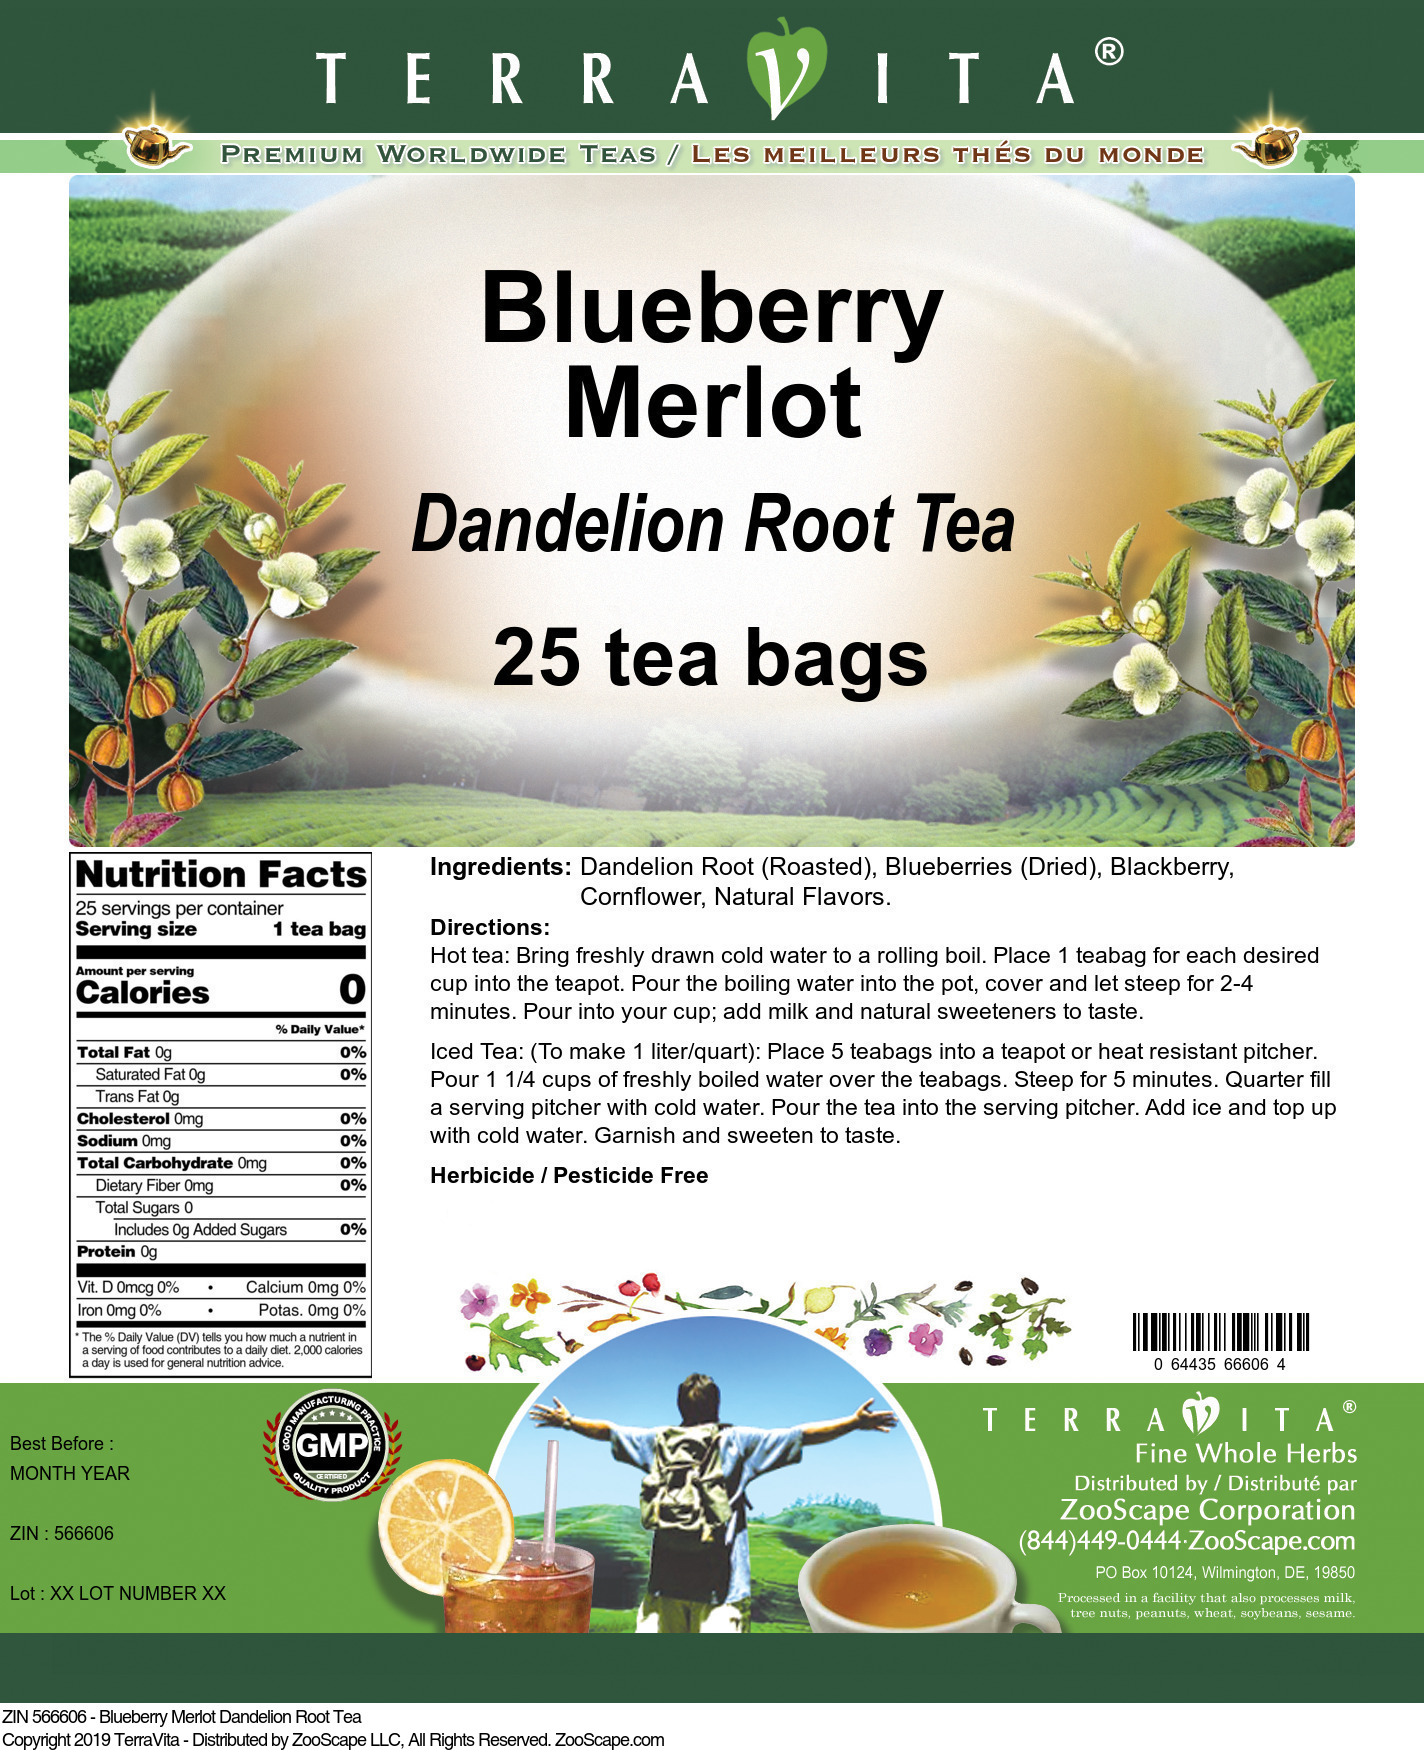 Blueberry Merlot Dandelion Root Tea - Label